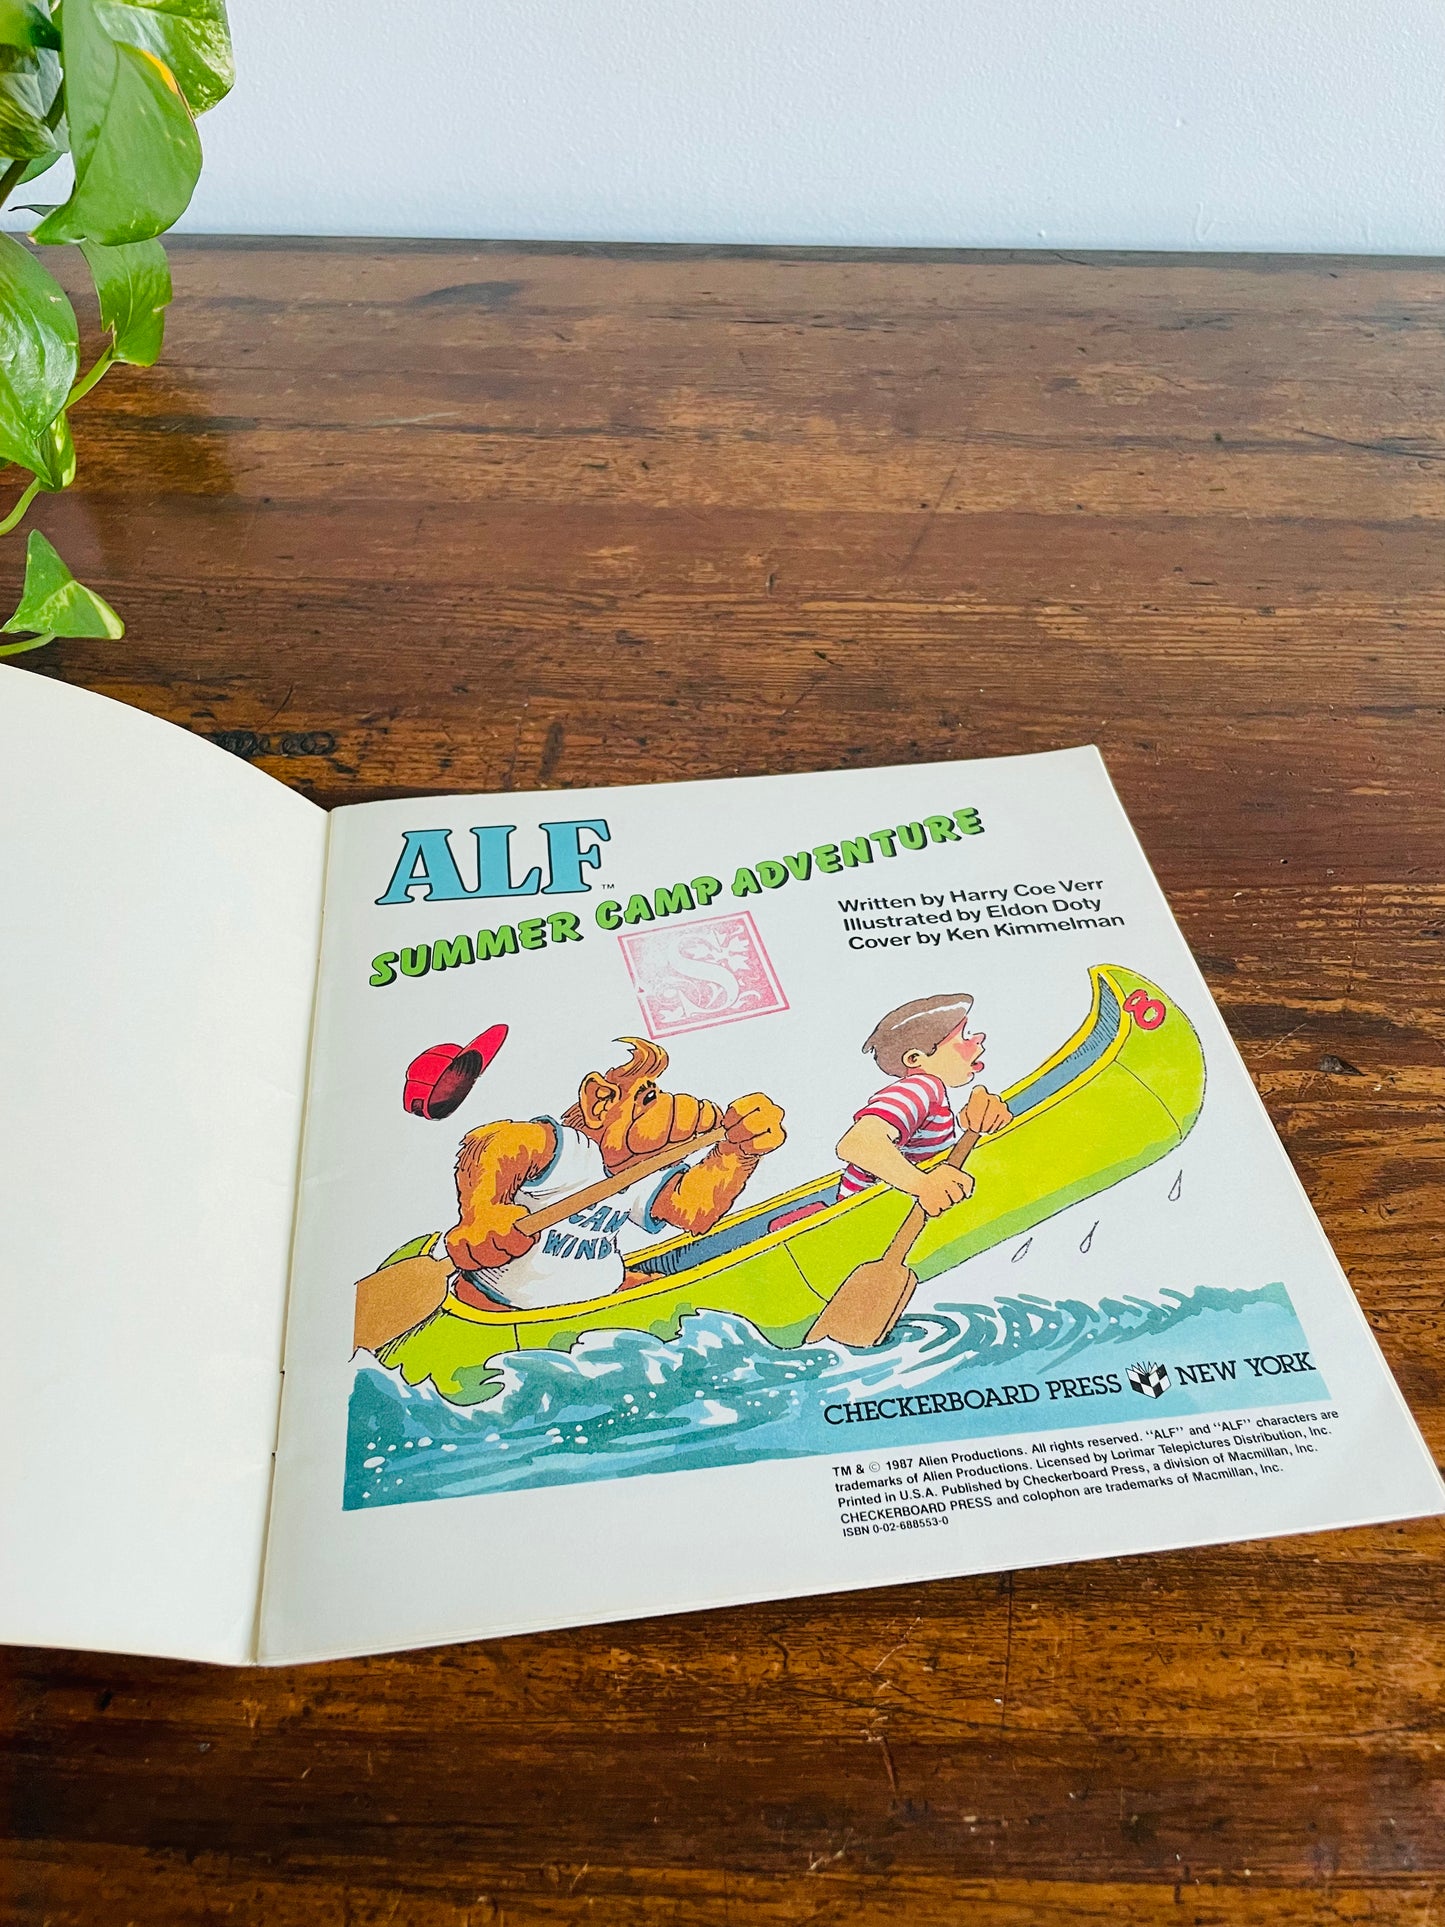 ALF Summer Camp Adventure Book by Harry Coe Verr (1987)